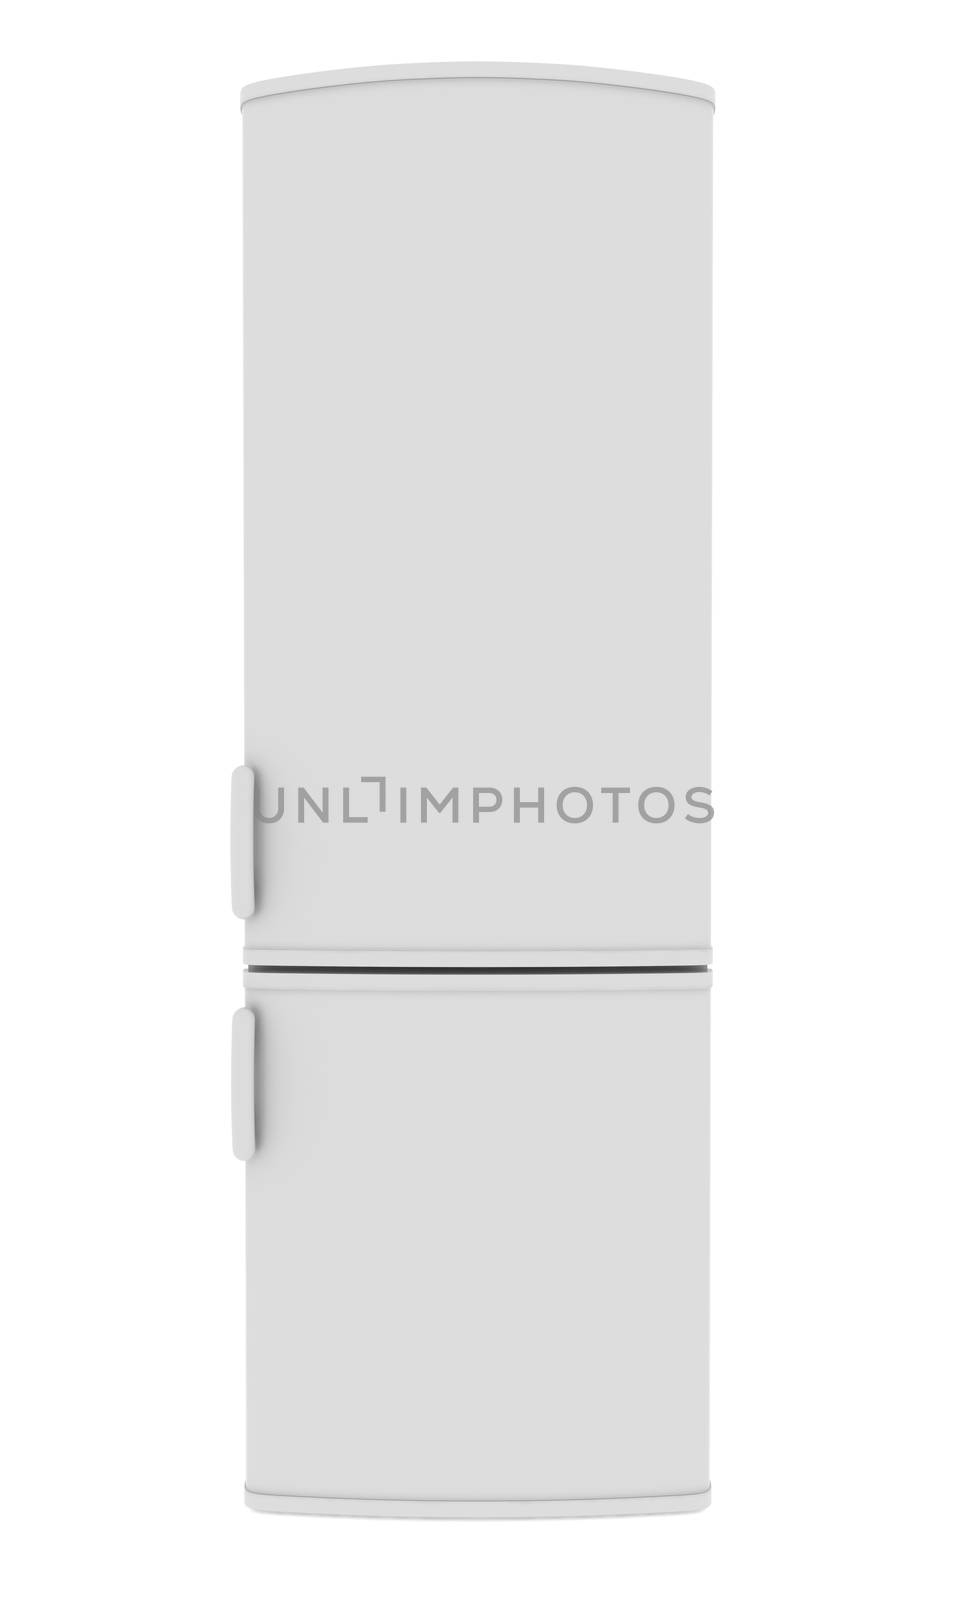 White refrigerator by cherezoff